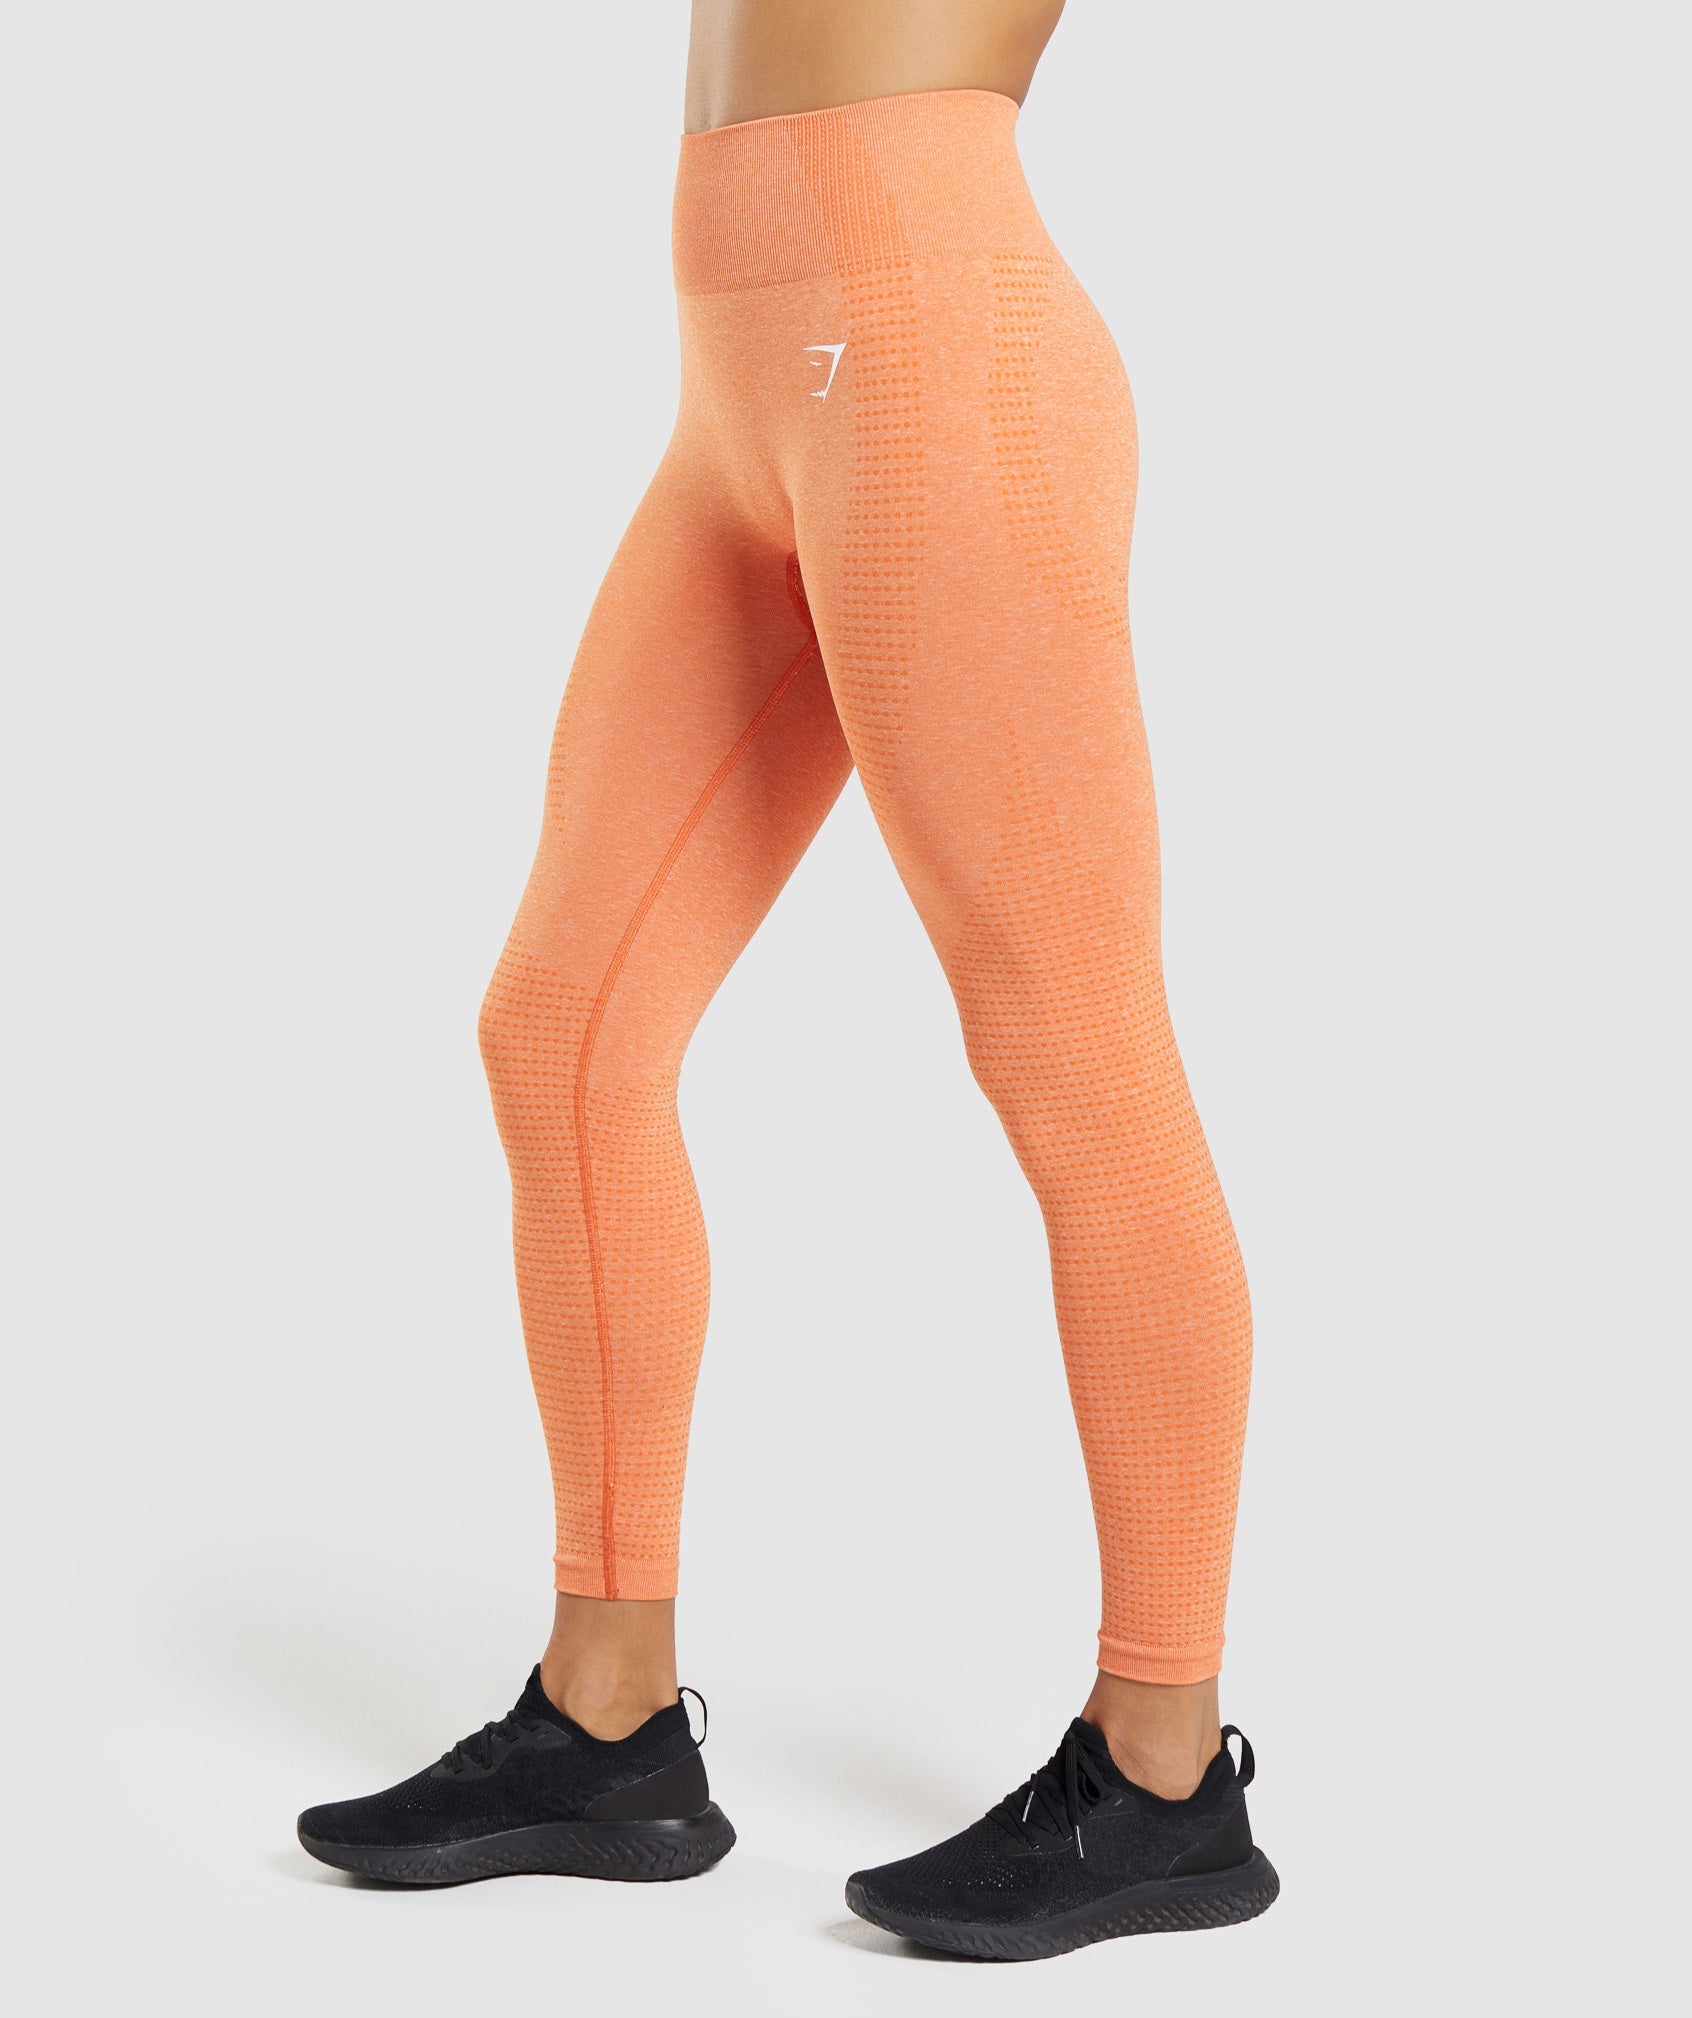 Vital Seamless 2.0 Leggings in Apricot Orange Marl - view 3